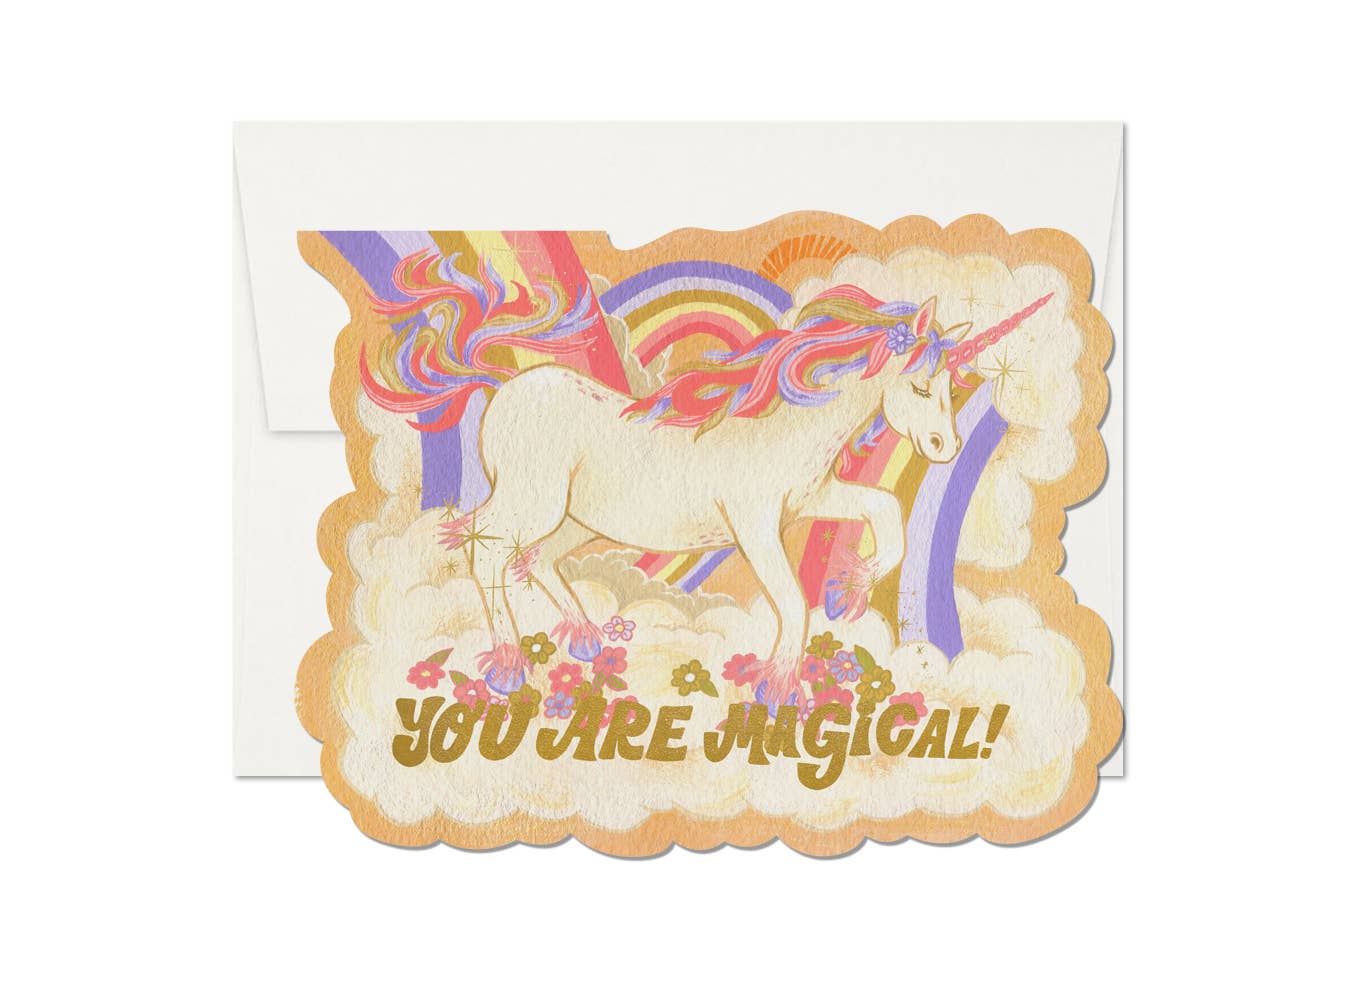 Magical Unicorn Greeting Card - Spiral Circle